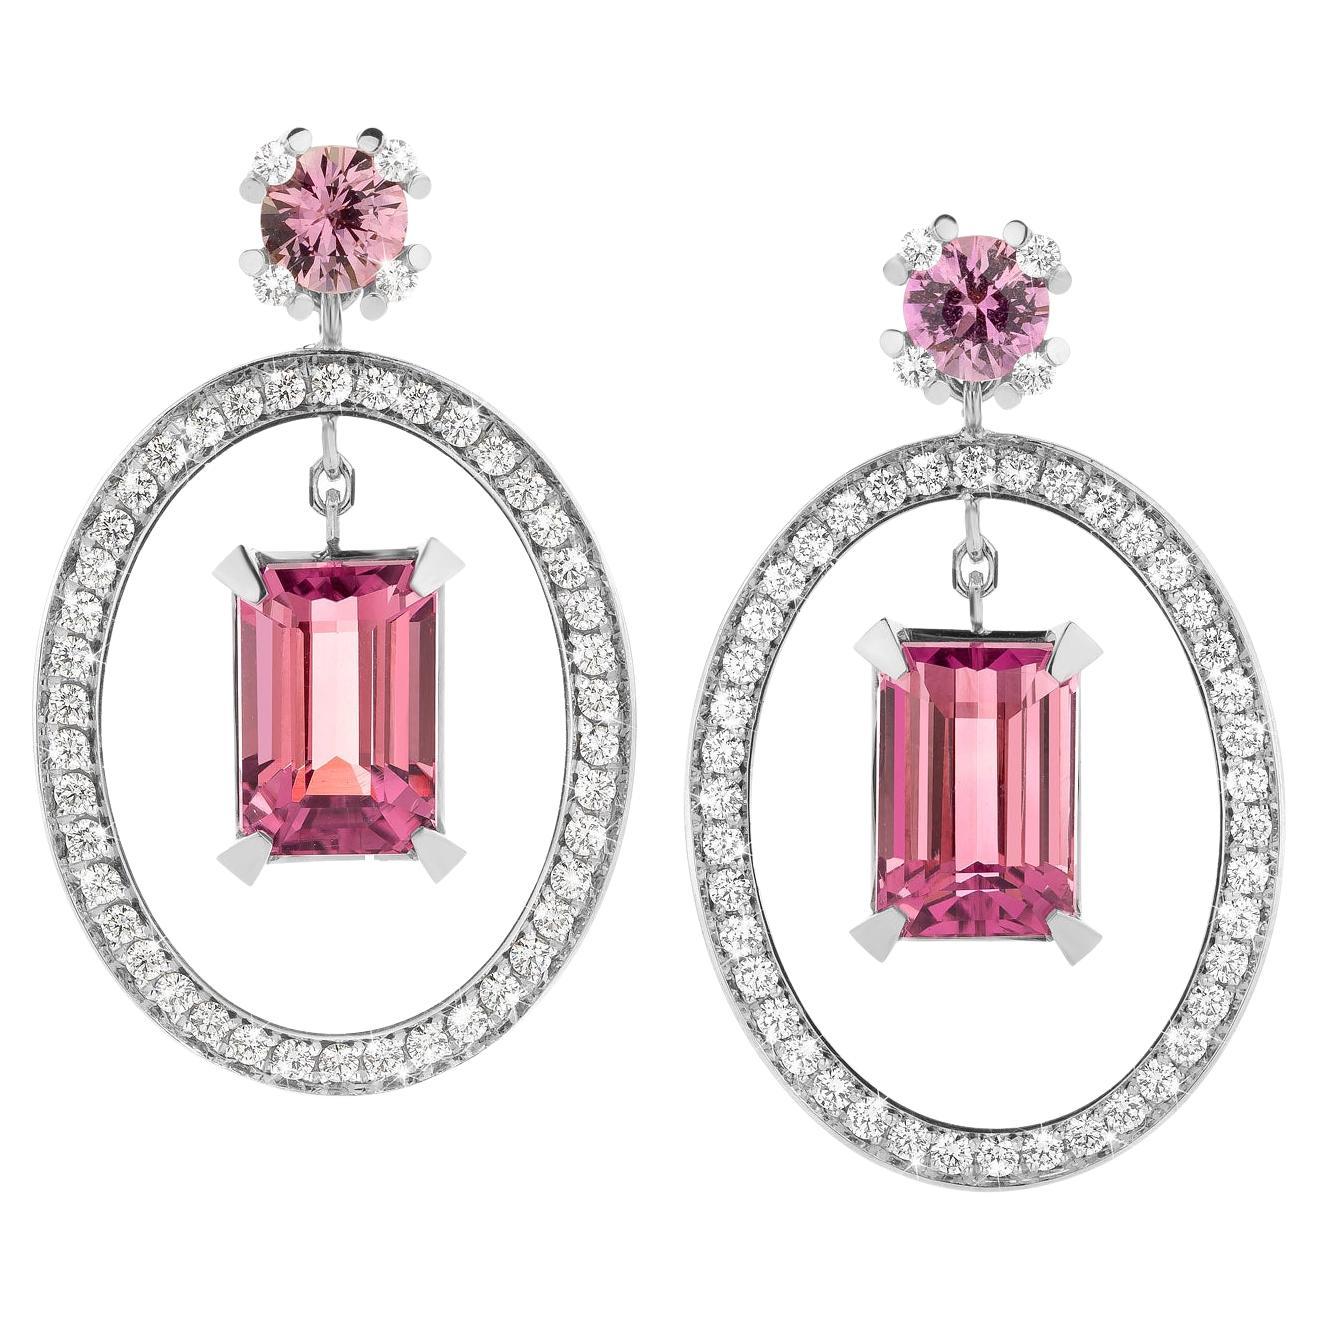 Cober “Tourmalines” with 4.14 Carat Tourmalines, Diamonds and Sapphires Earrings